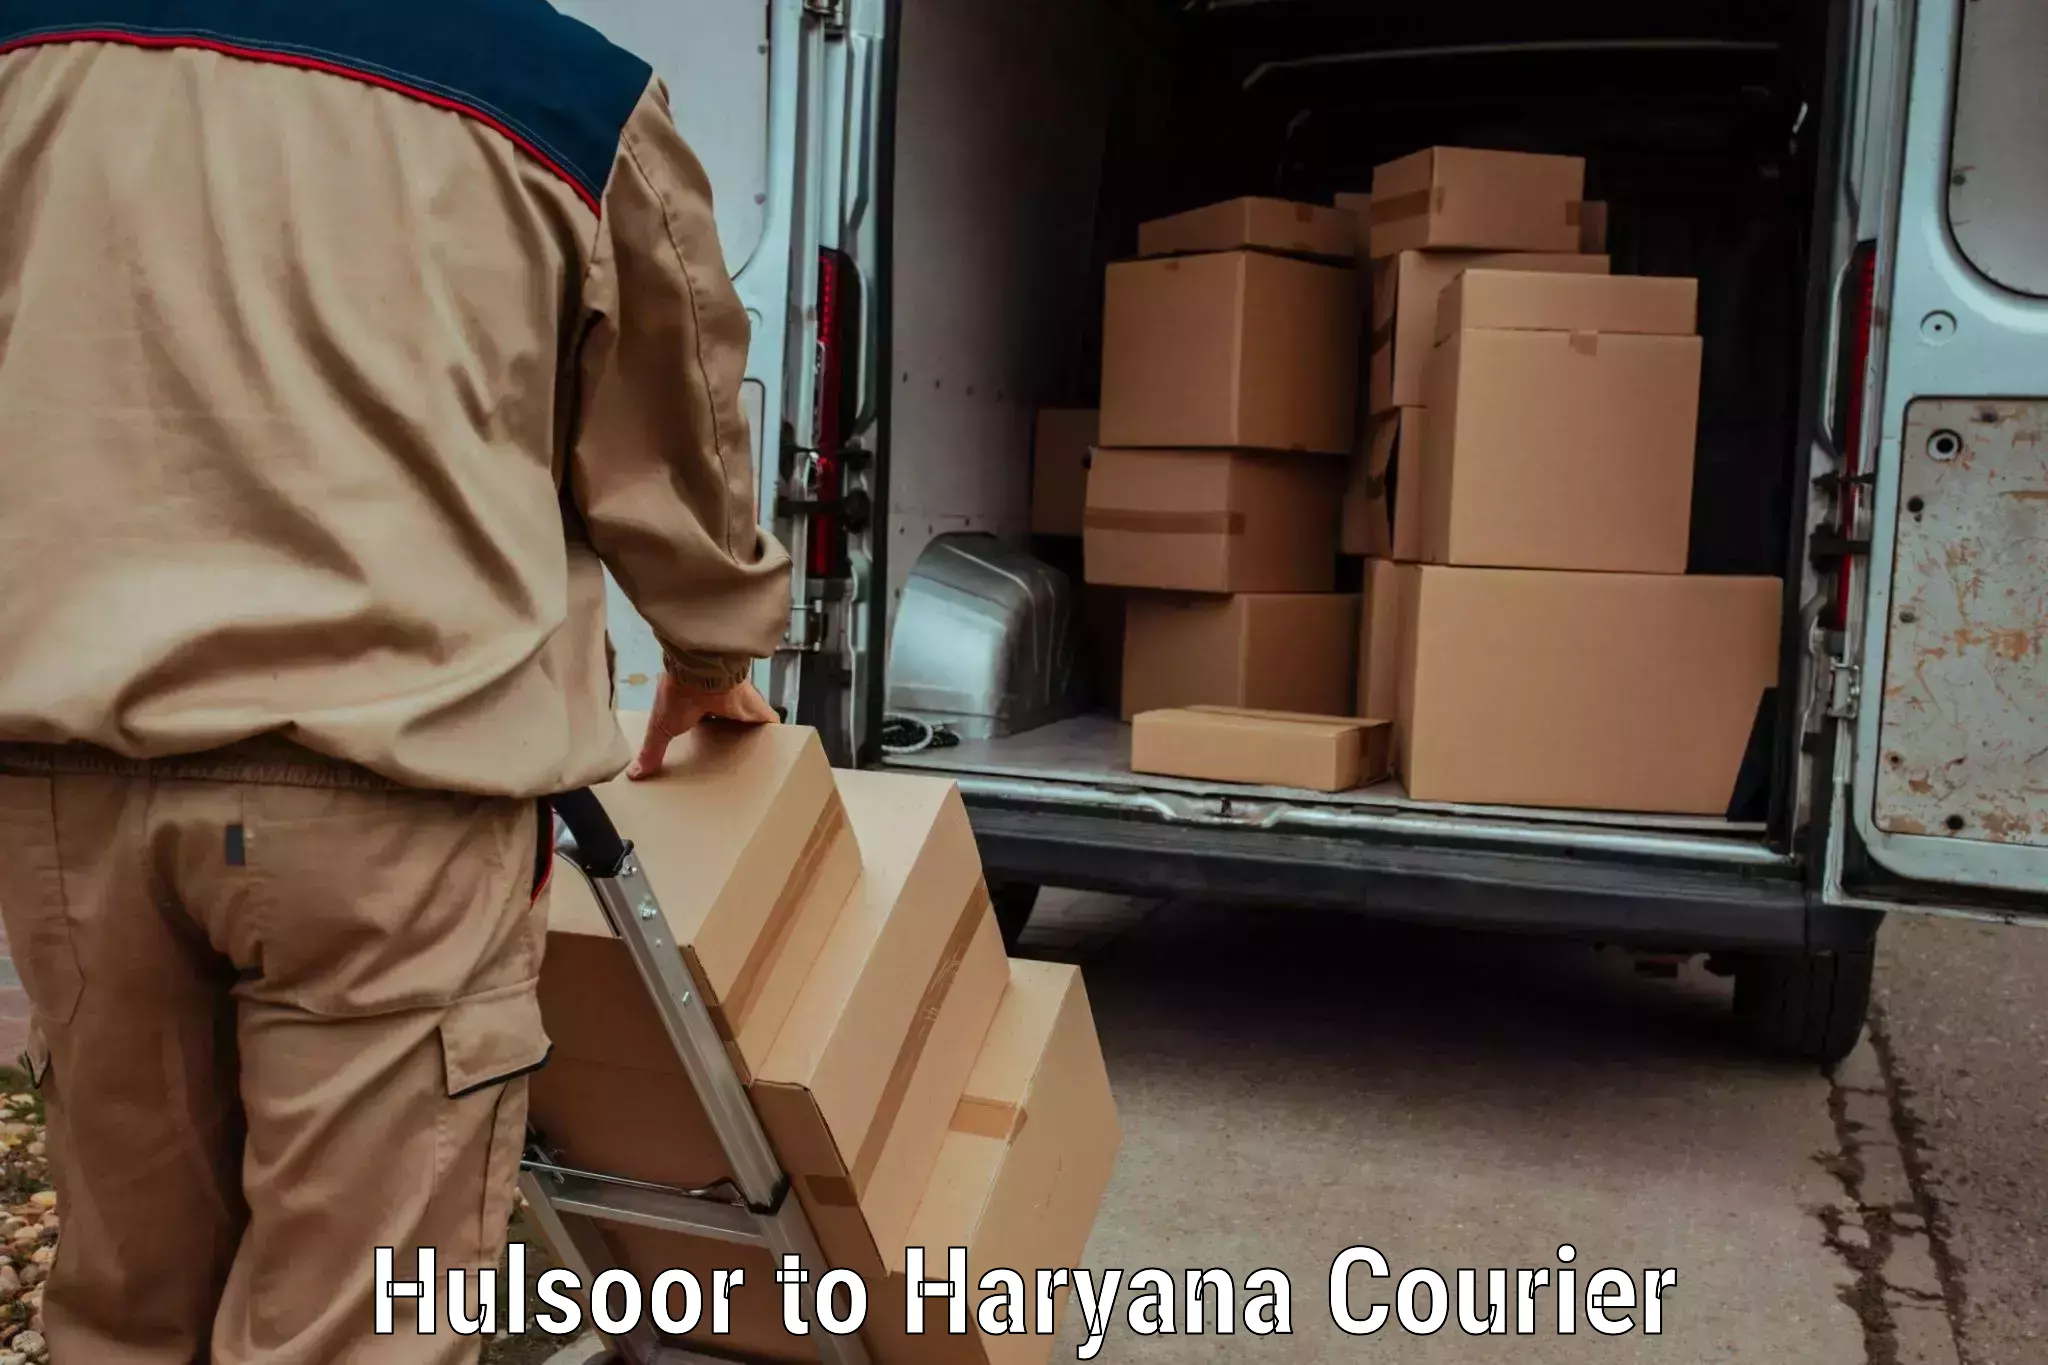 Express delivery network Hulsoor to Gurugram